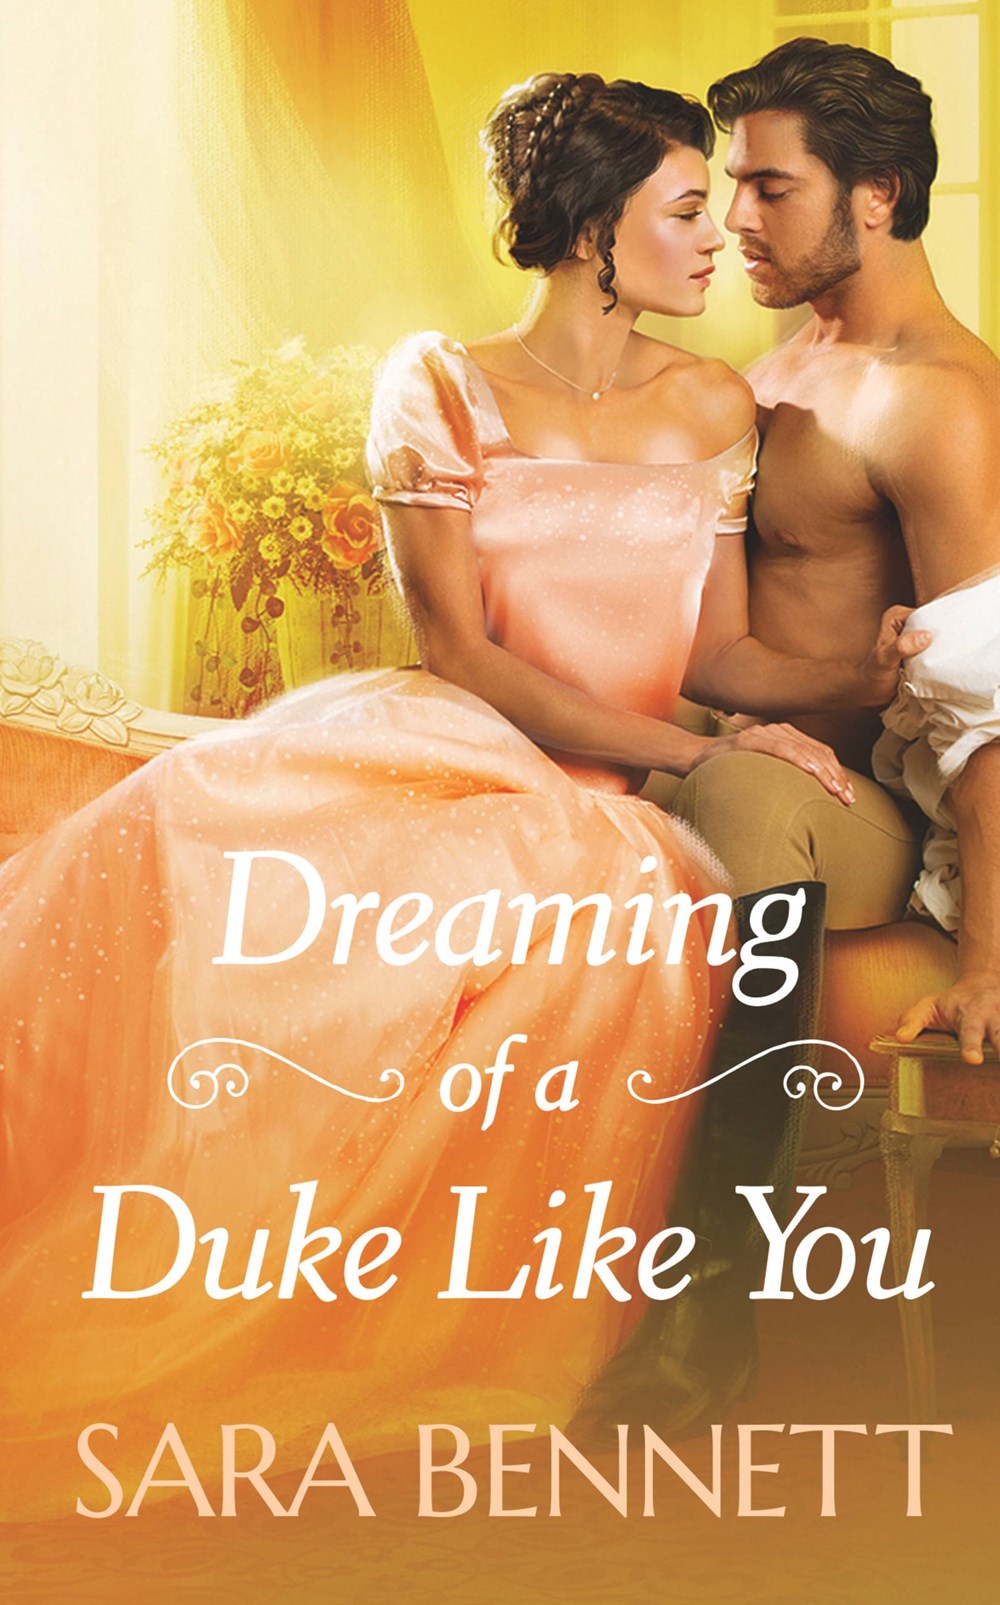 Historical Romance Favorite Characters | Dashing Dukes